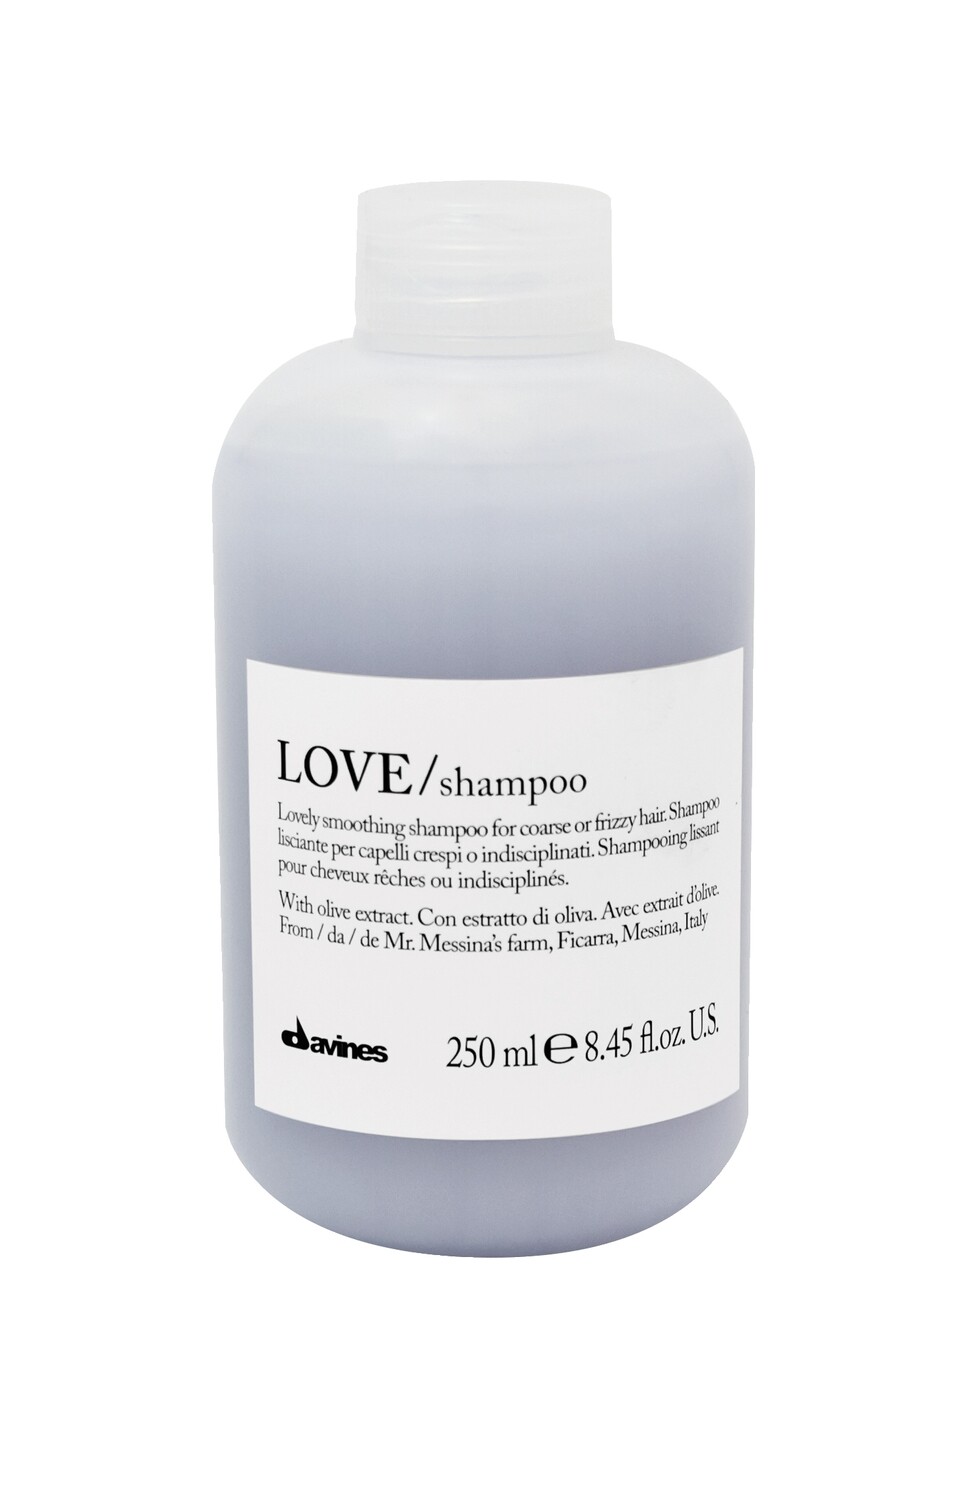 Davines LOVE/Shampoo Smoothing 8.45 fl. oz.